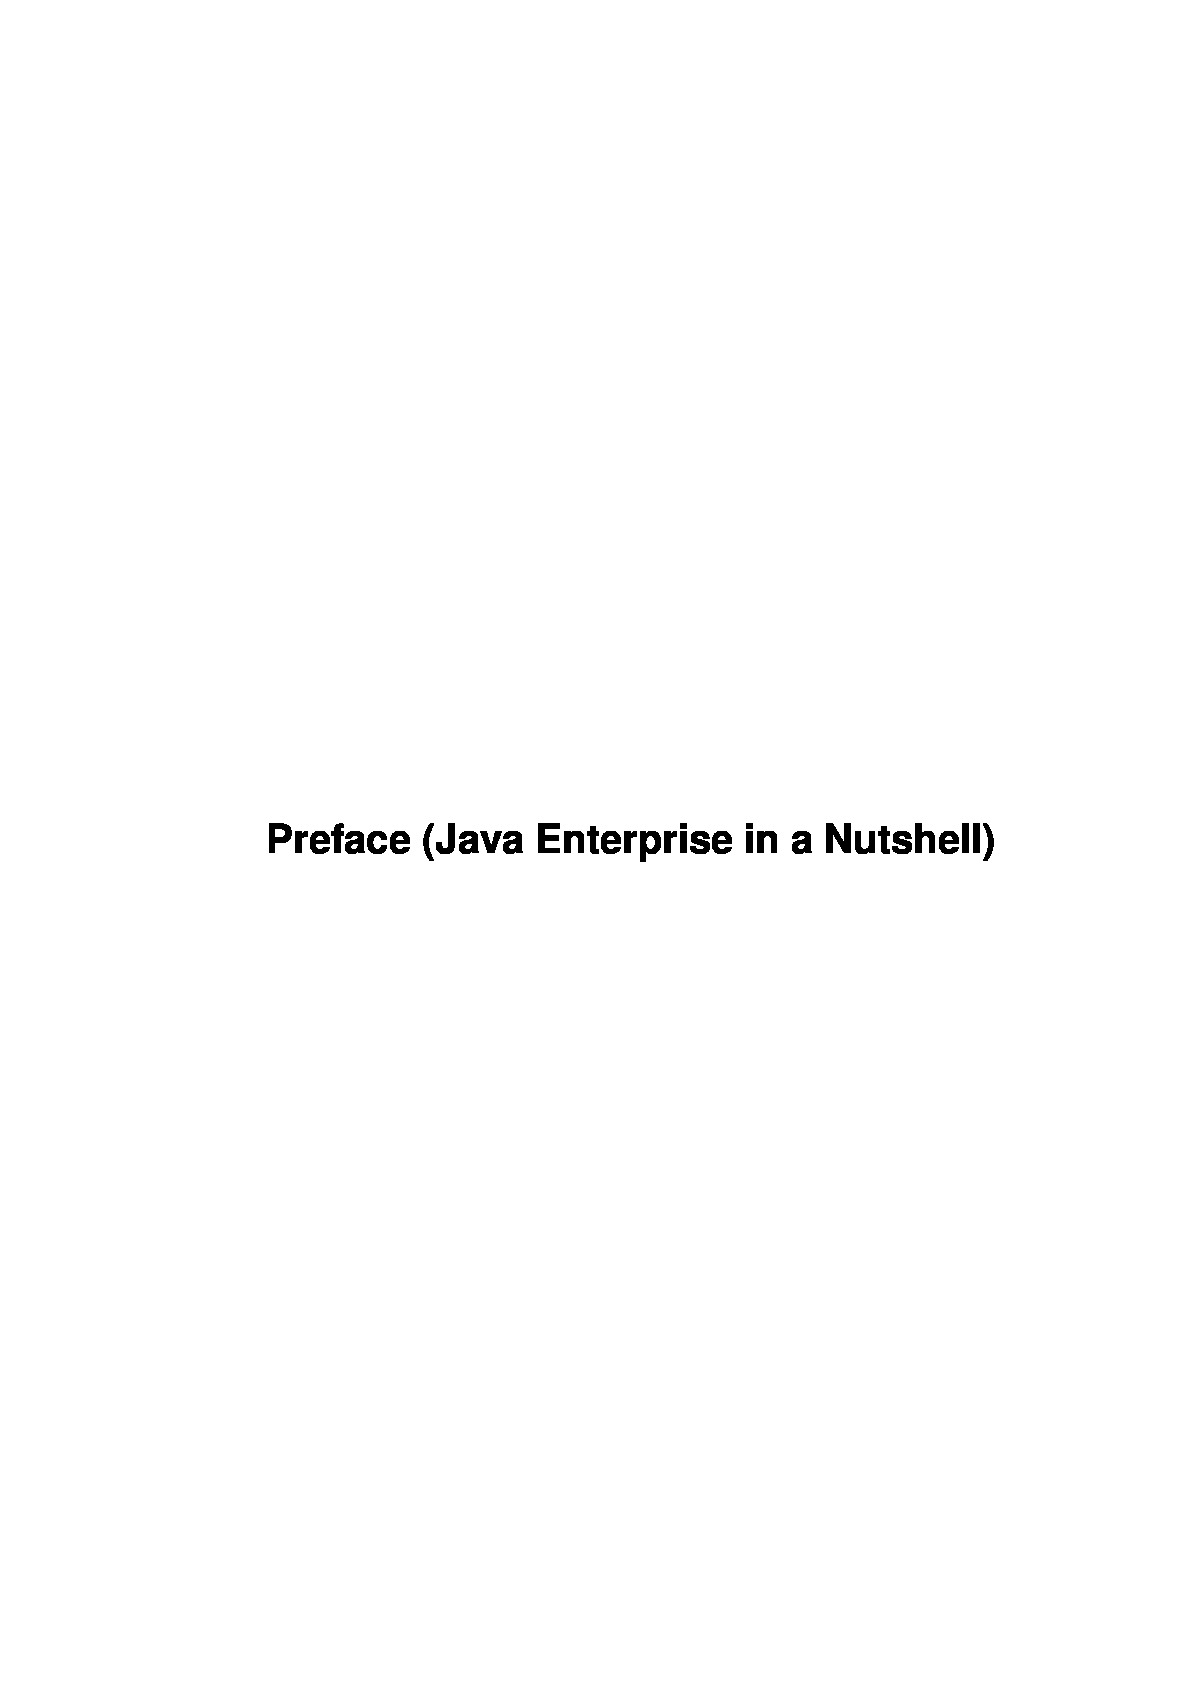 [JAVA][Java Enterprise In A Nutshell]